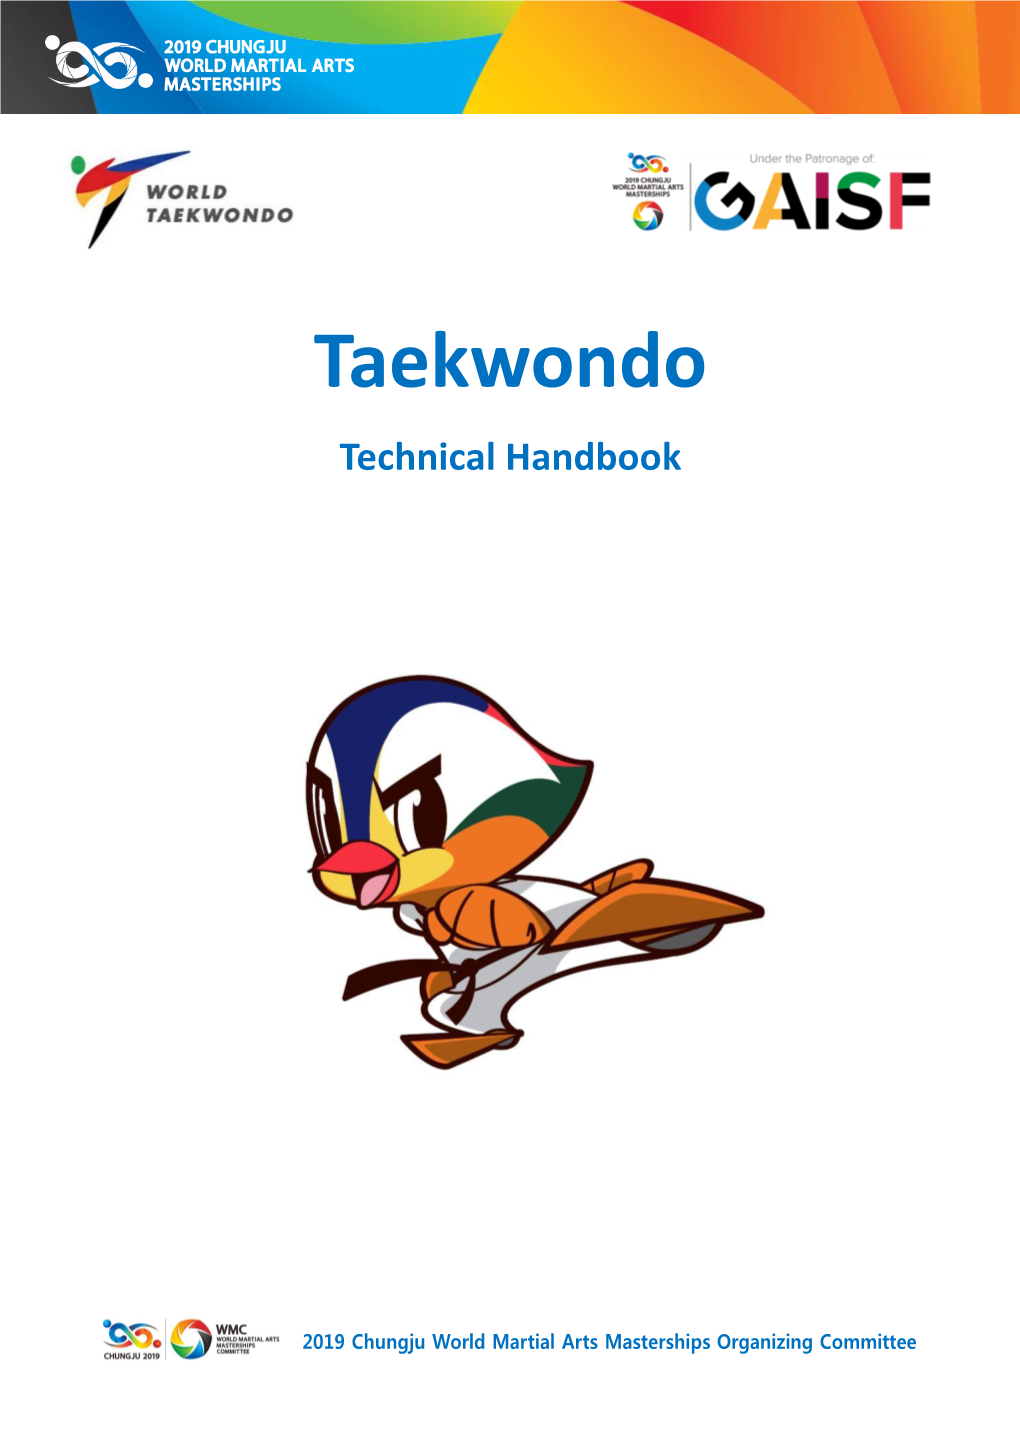 World Taekwondo (WT) 3.2 Competition Manager: Min Kyu Ji (KOR)